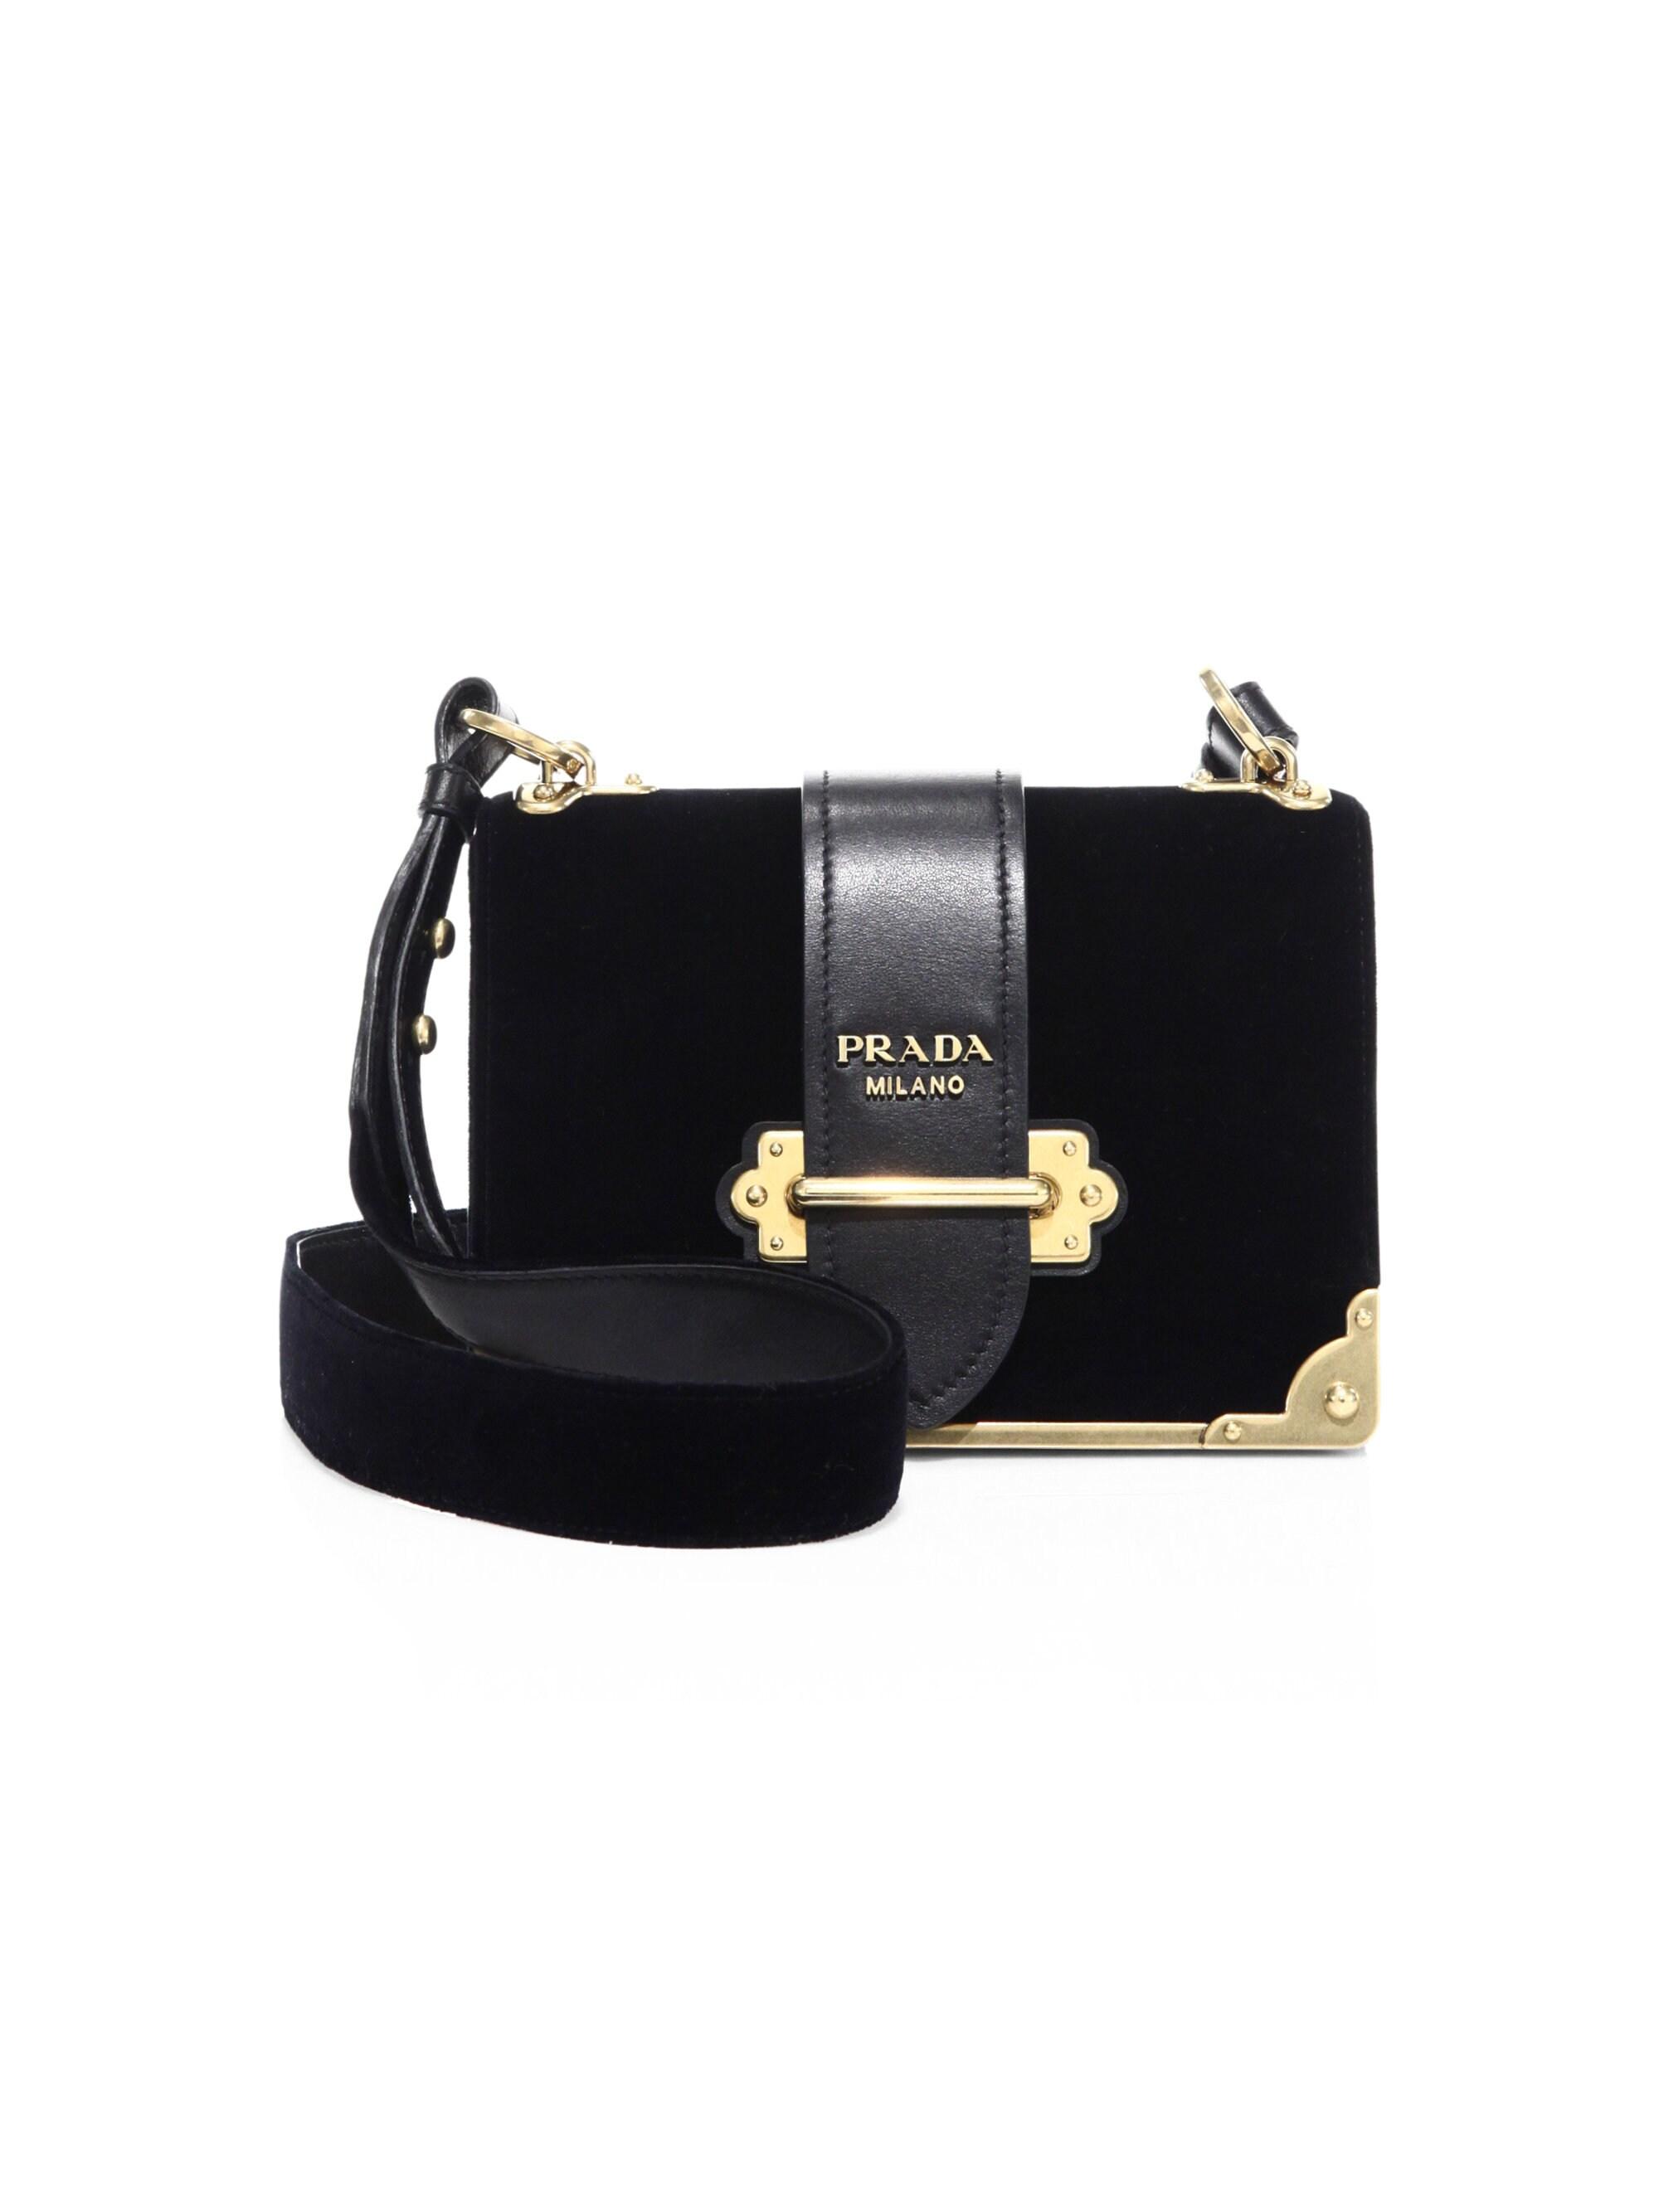 Prada Cahier Velvet & Leather Shoulder Bag in Nero (Black) - Lyst